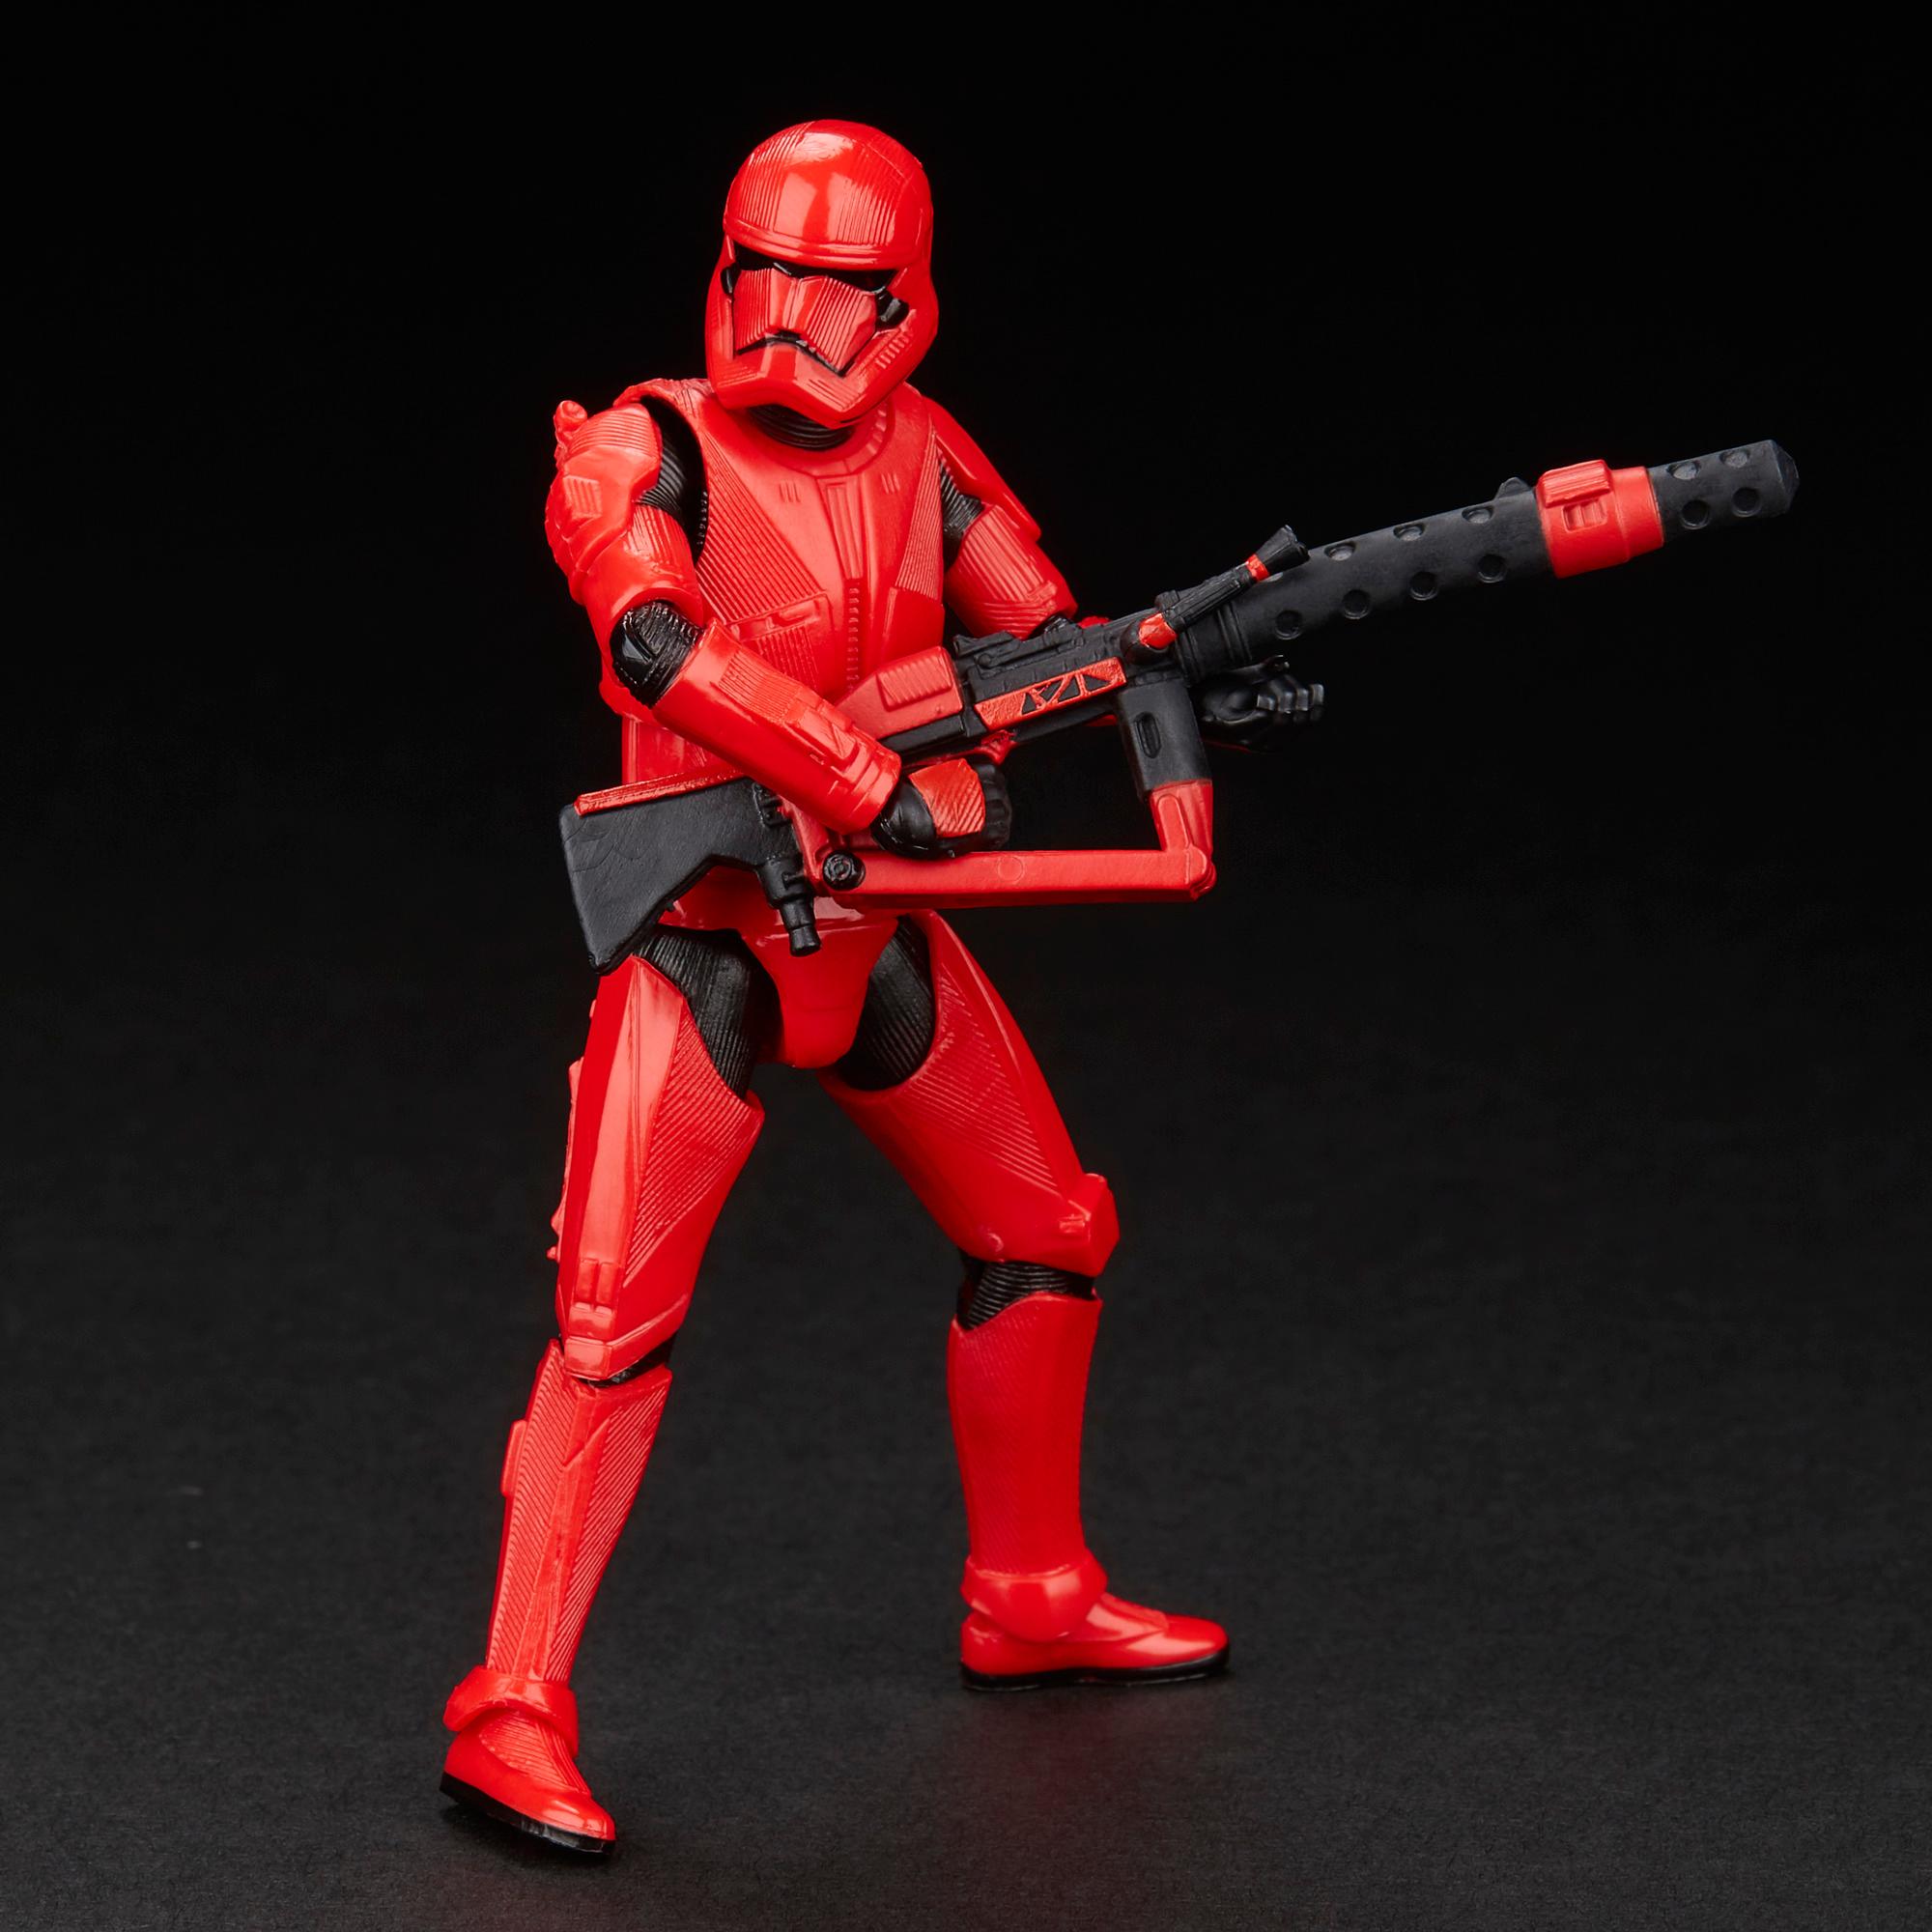 Star Wars The Rise Of Skywalker Sith Trooper 12 Inch Figure NEW Disney Hasbro 